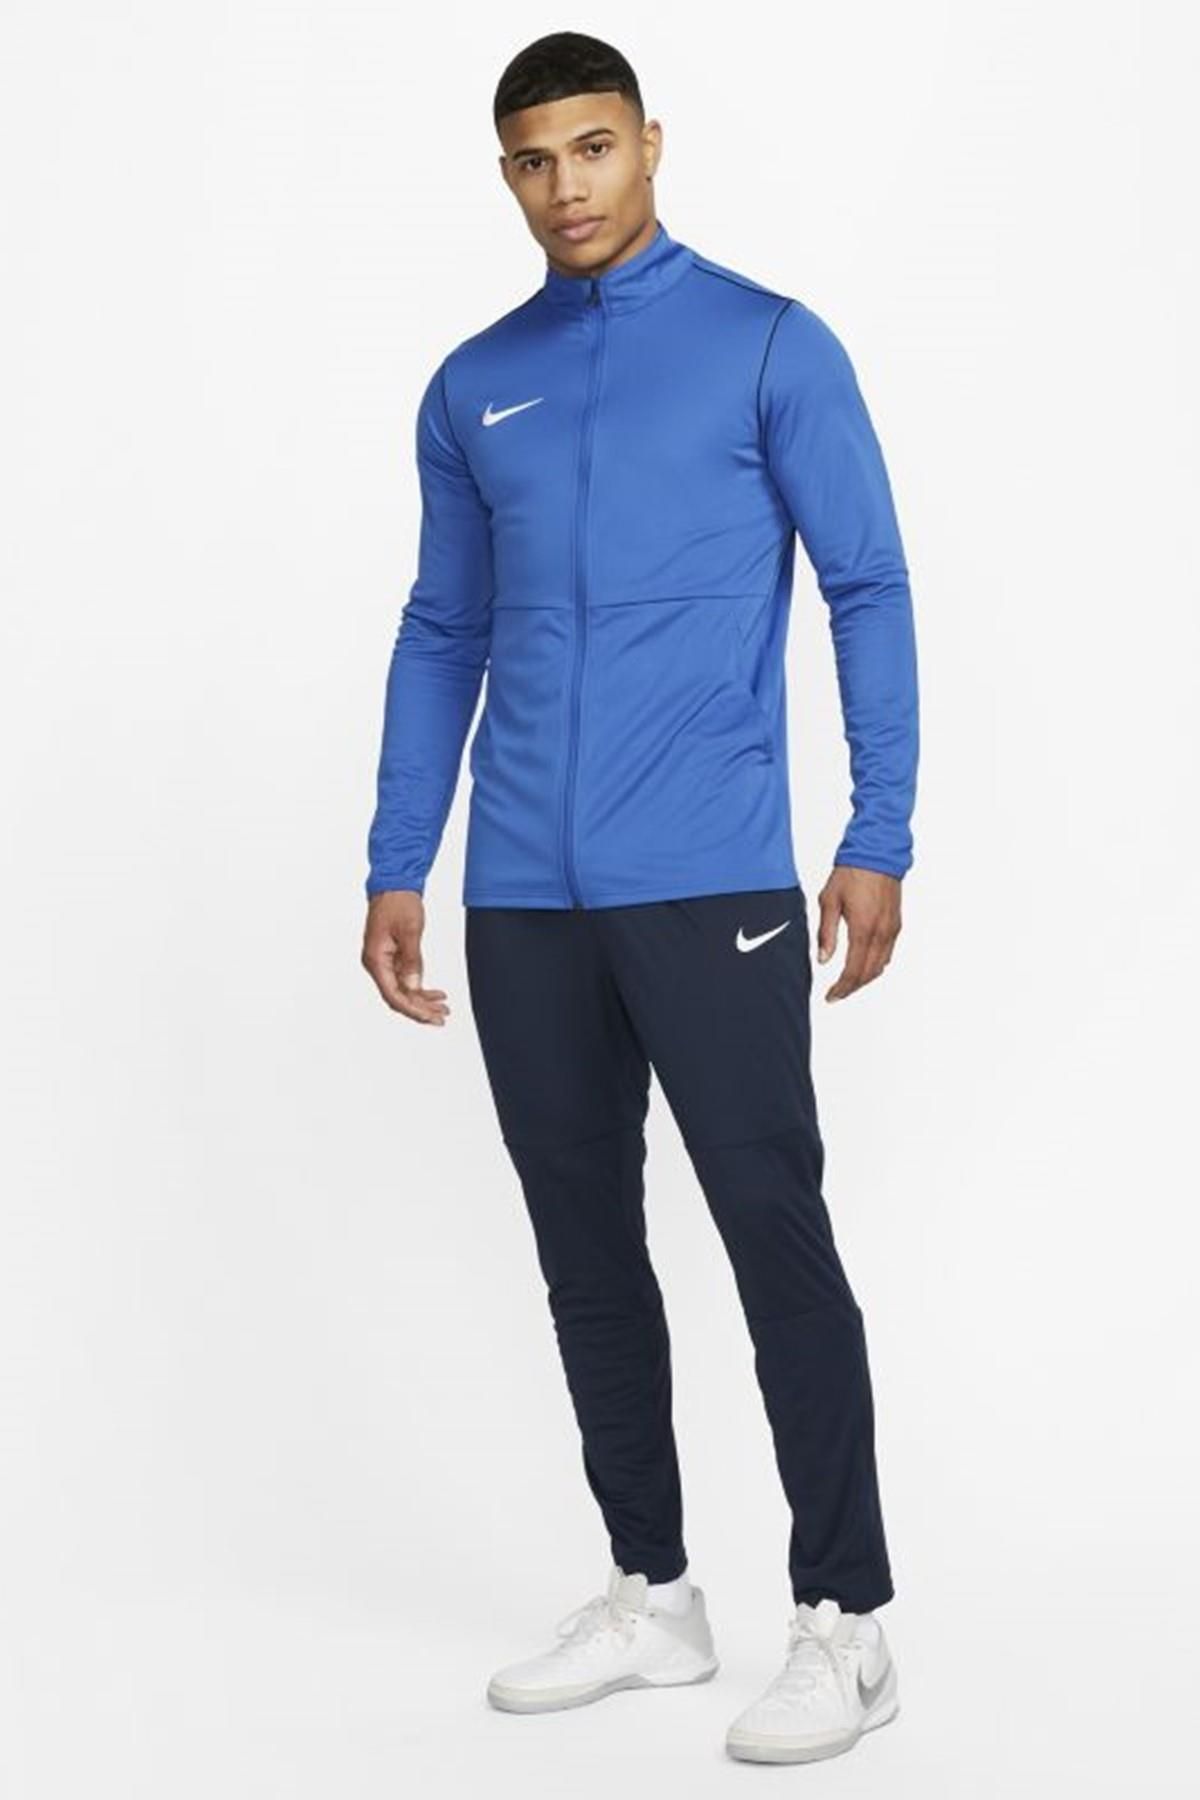 Nike Dri Fit Academy Full Tracksuit Blue Navy Mavi Lacivert Eşofman Takımı